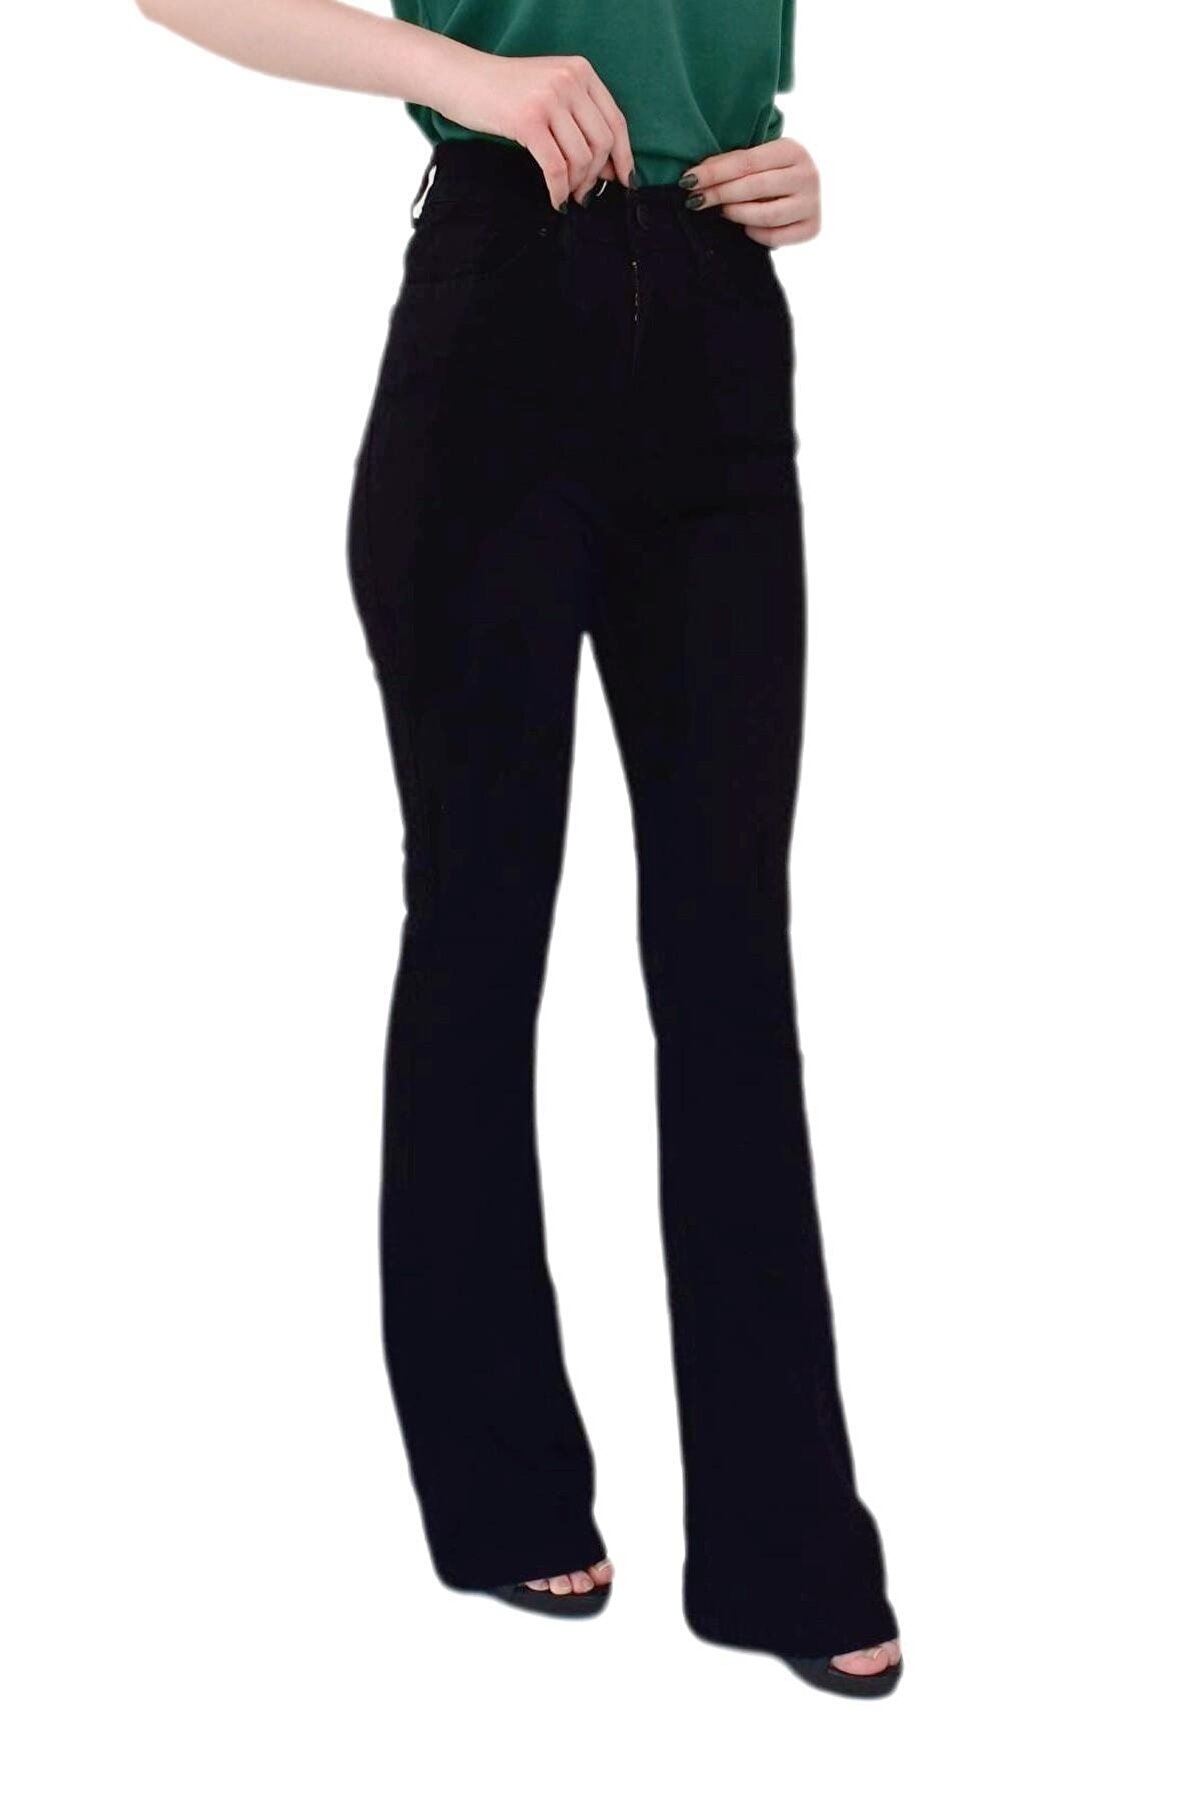 Woow Kadın Yüksek Bel Jeans Ispanyol Paça Pantolon Bgl-st02112